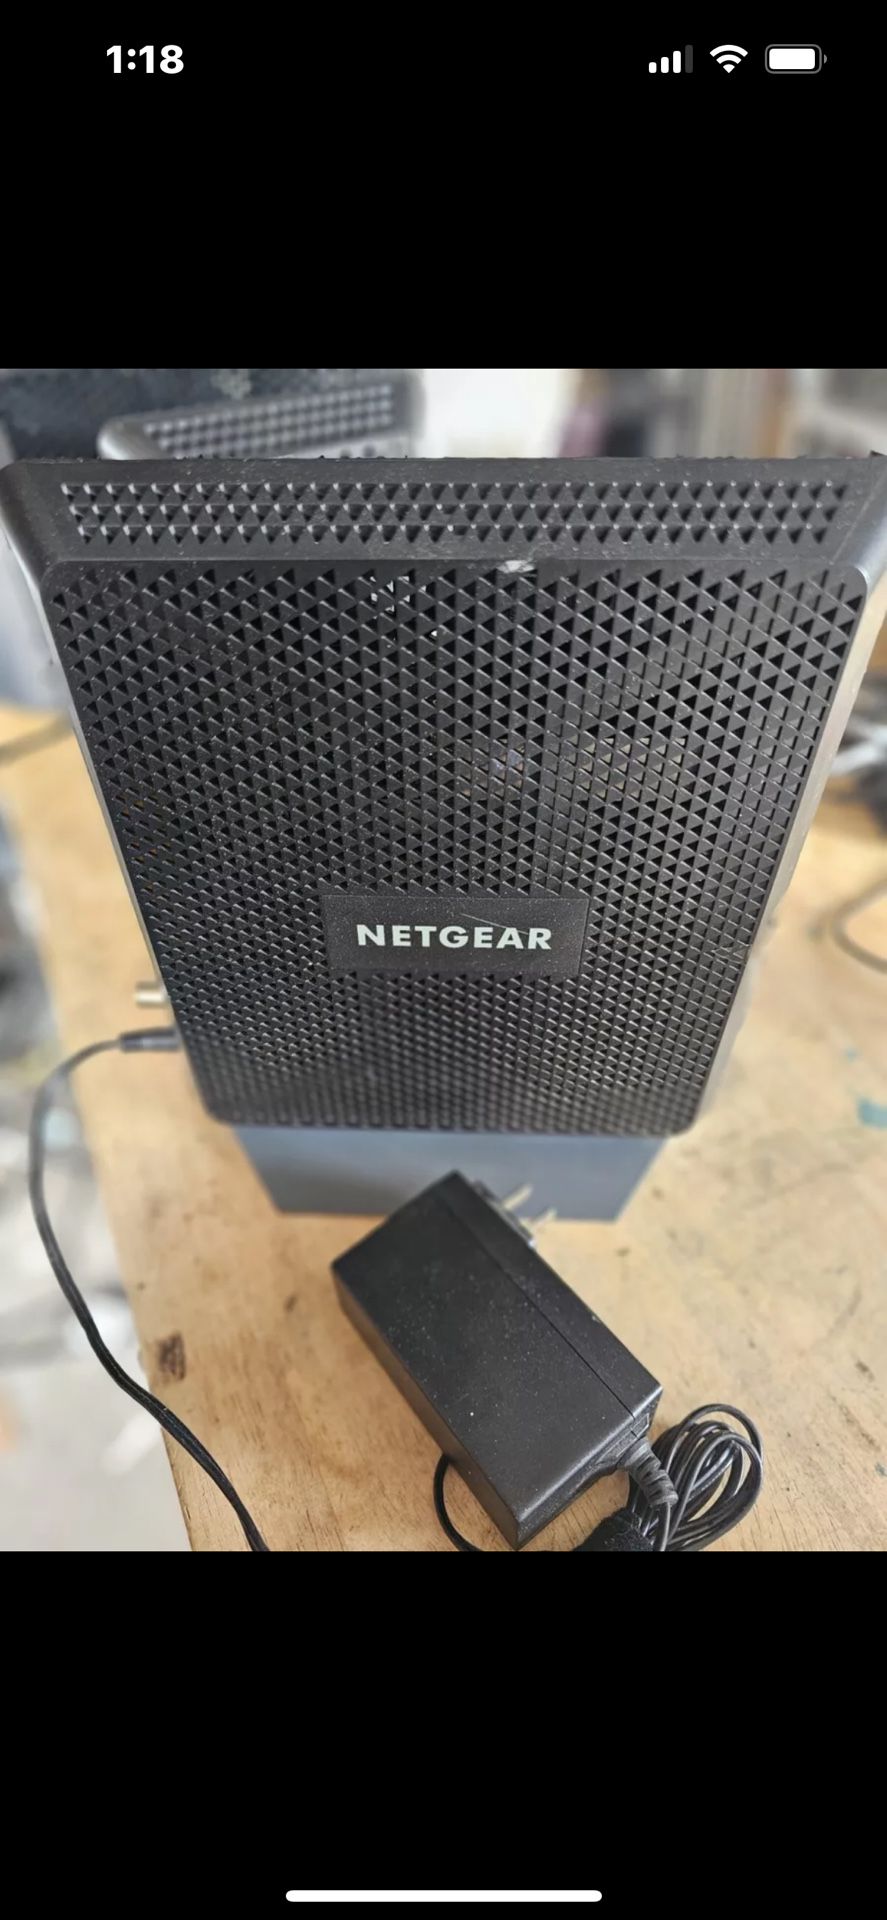 NETGEAR Nighthawk Cable Modem 